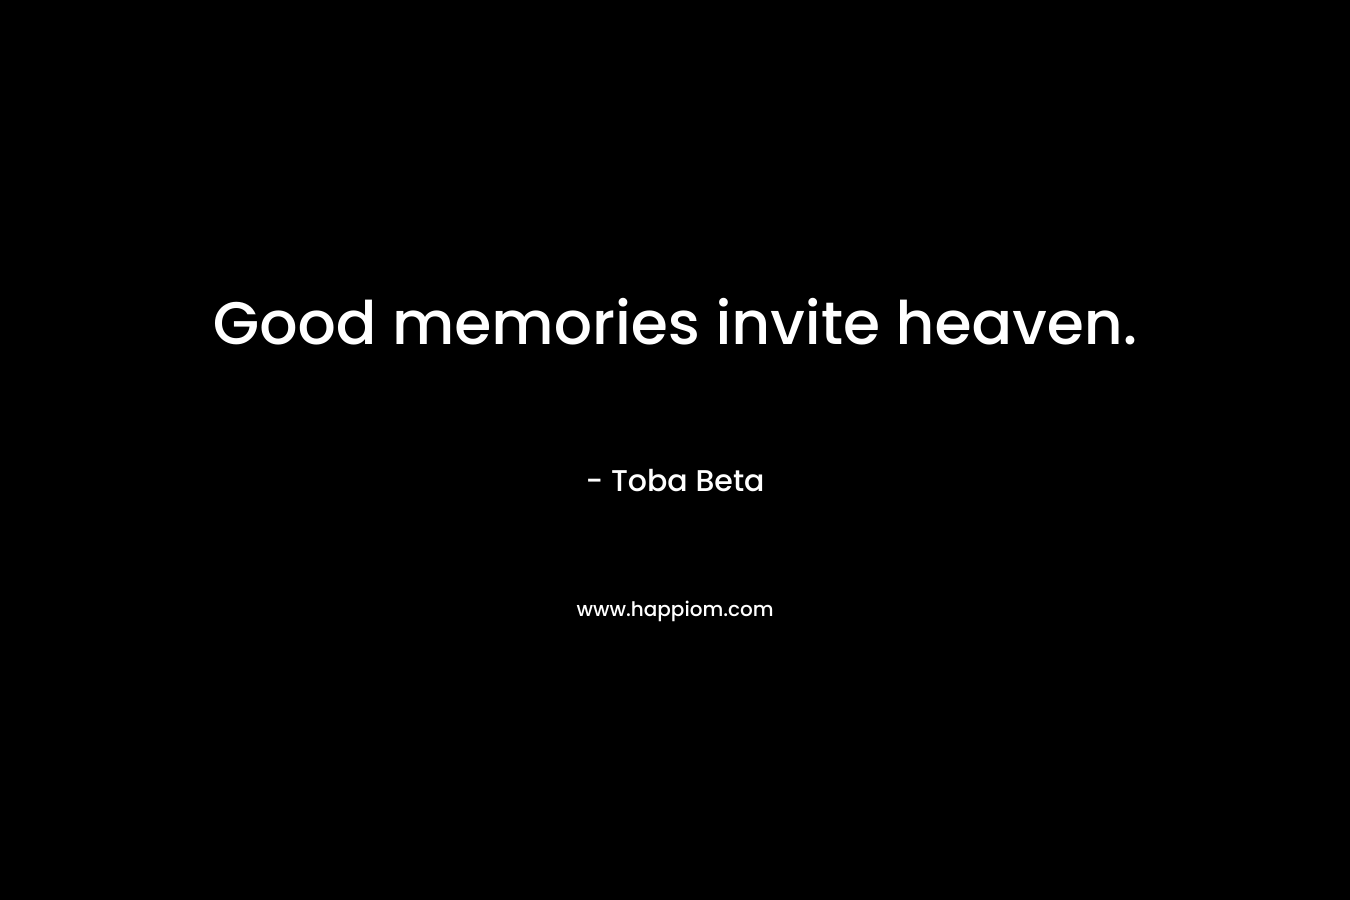 Good memories invite heaven.